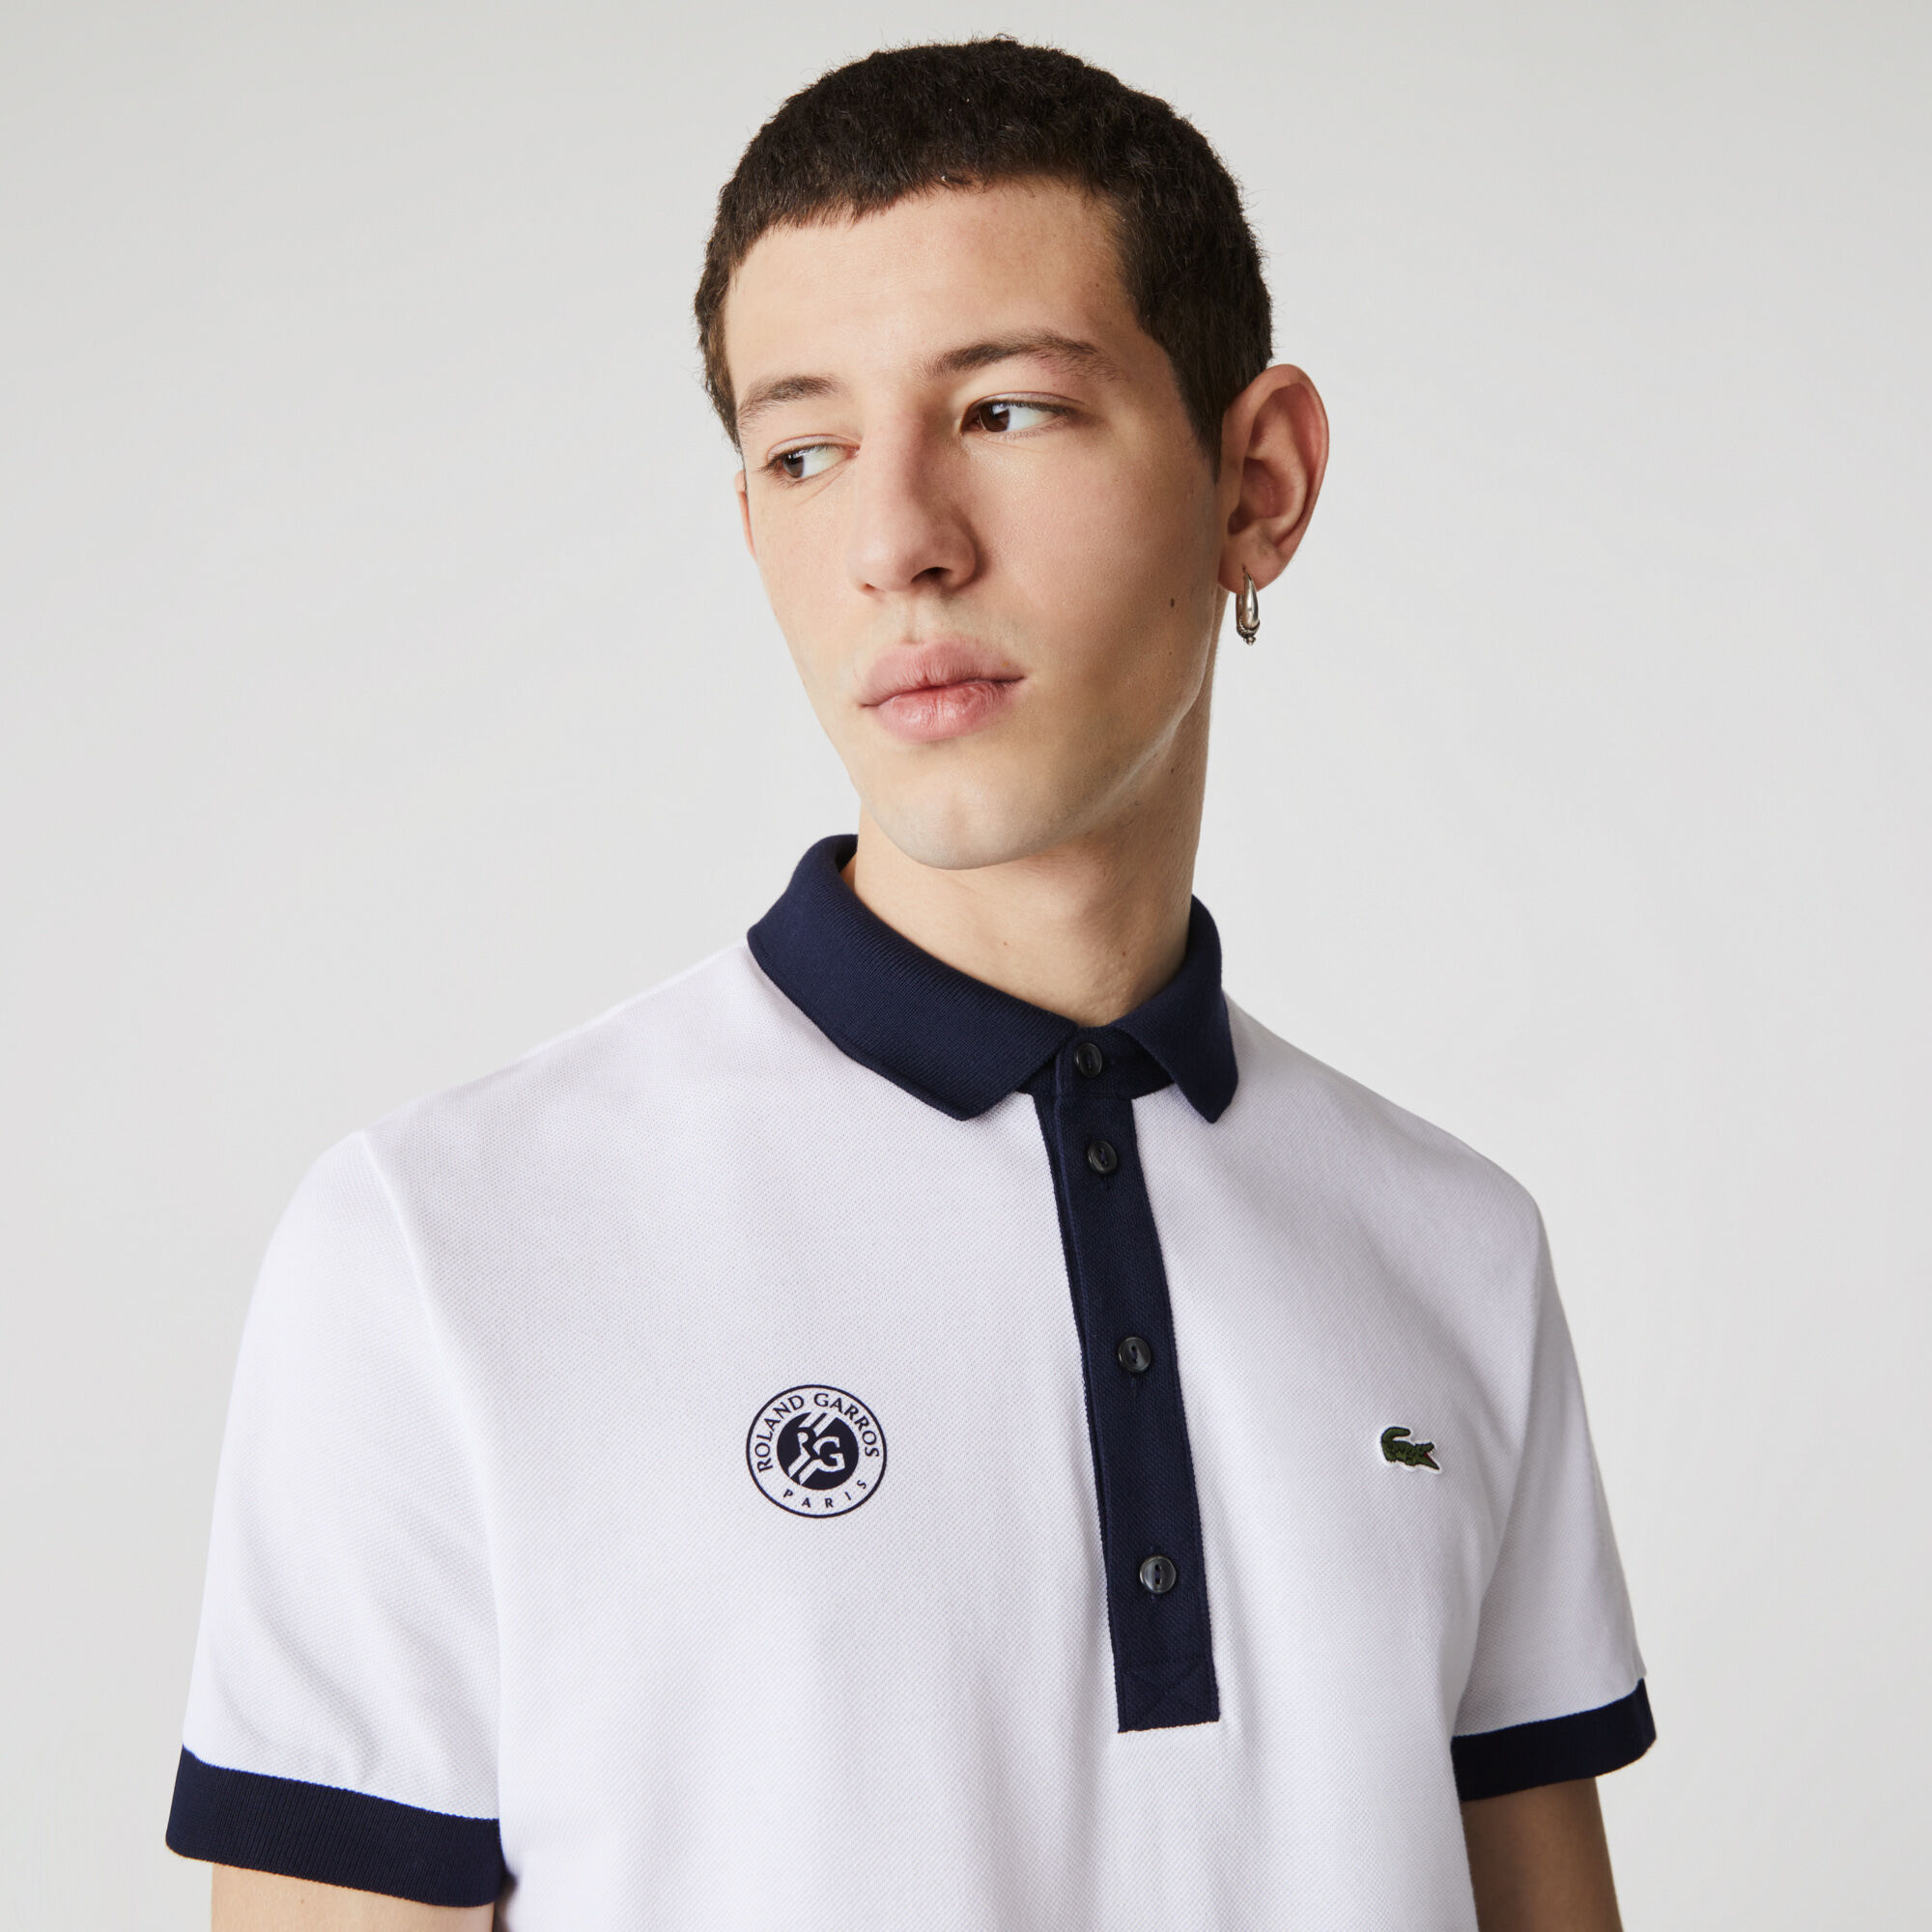 Men’s Lacoste SPORT French Open Edition Cotton Piqué Polo Shirt